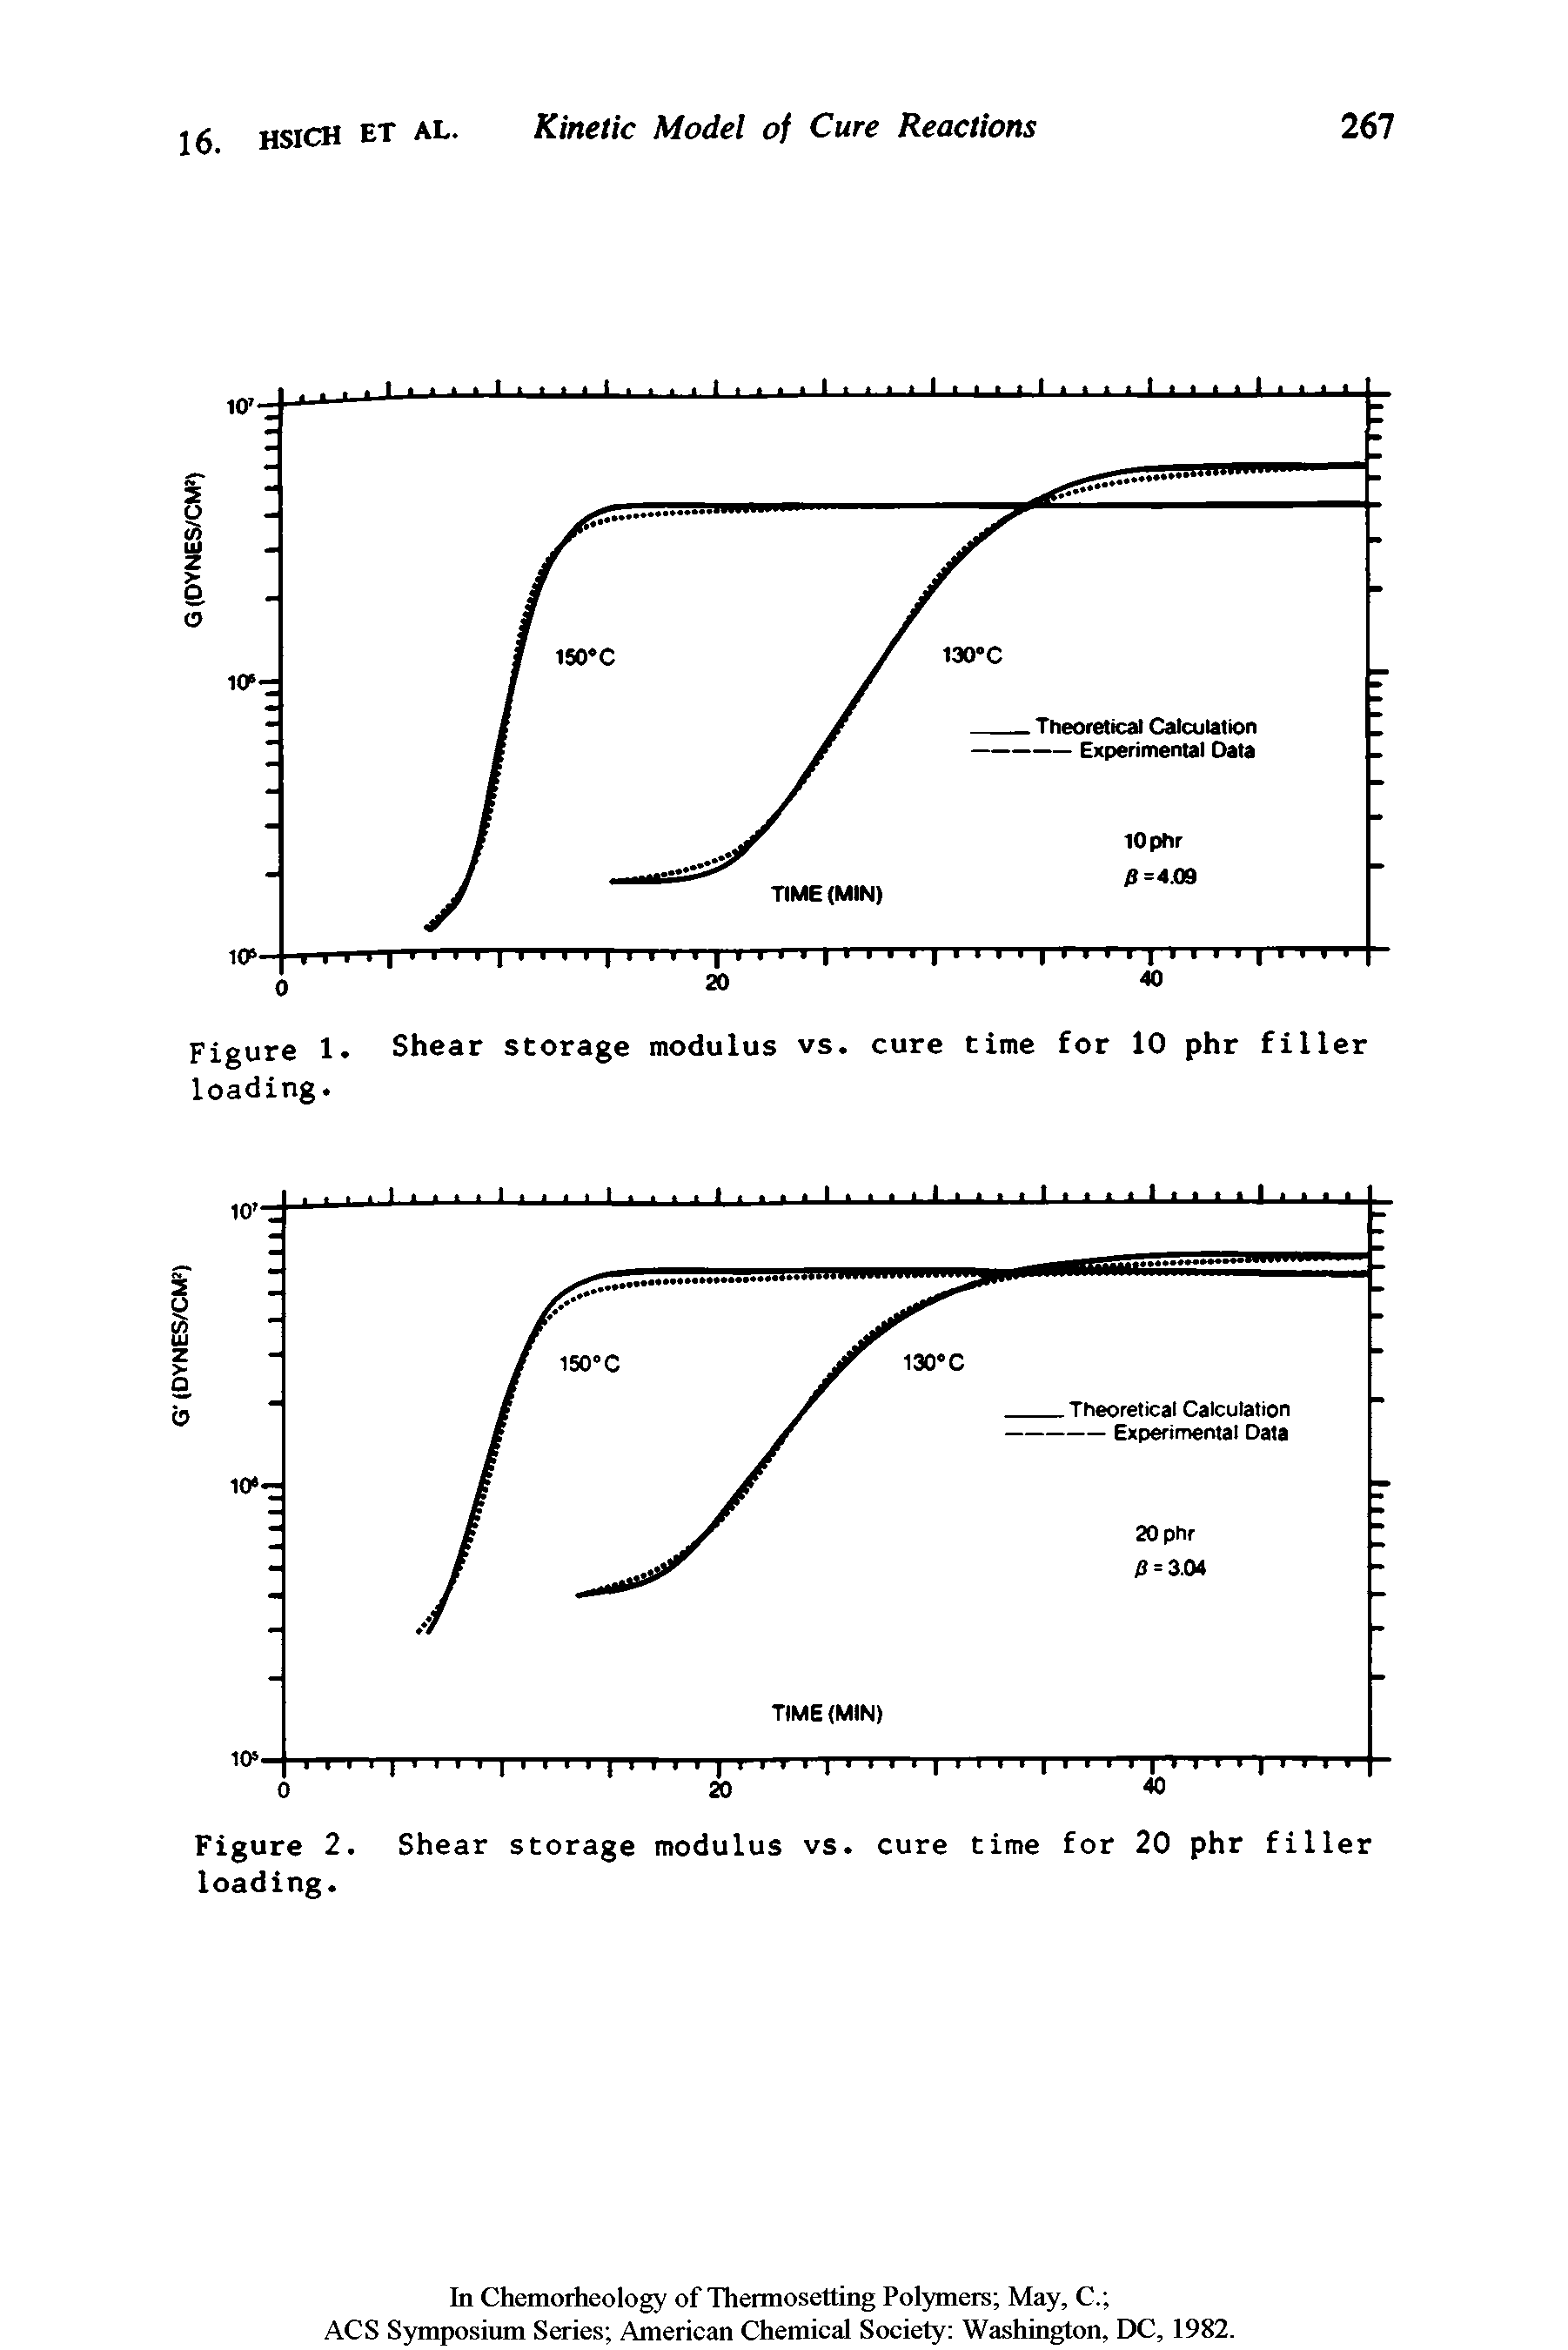 Figure 1. Shear storage modulus vs. cure time for 10 phr filler loading.